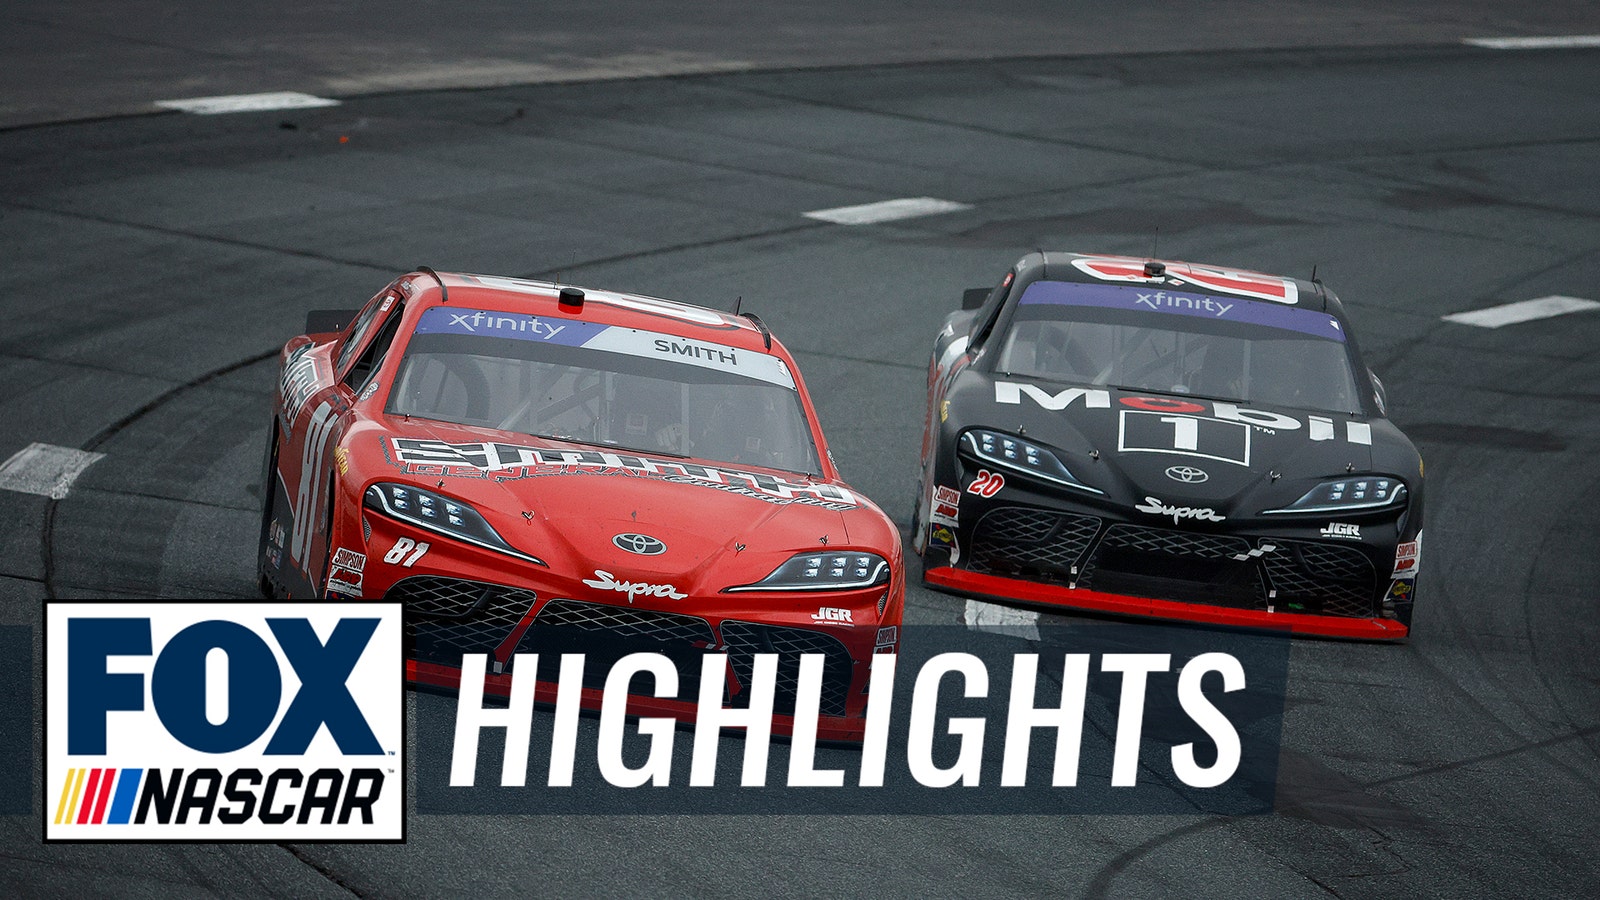 NASCAR Xfinity Series: Sci Aps 200 Highlights | NASCAR on FOX